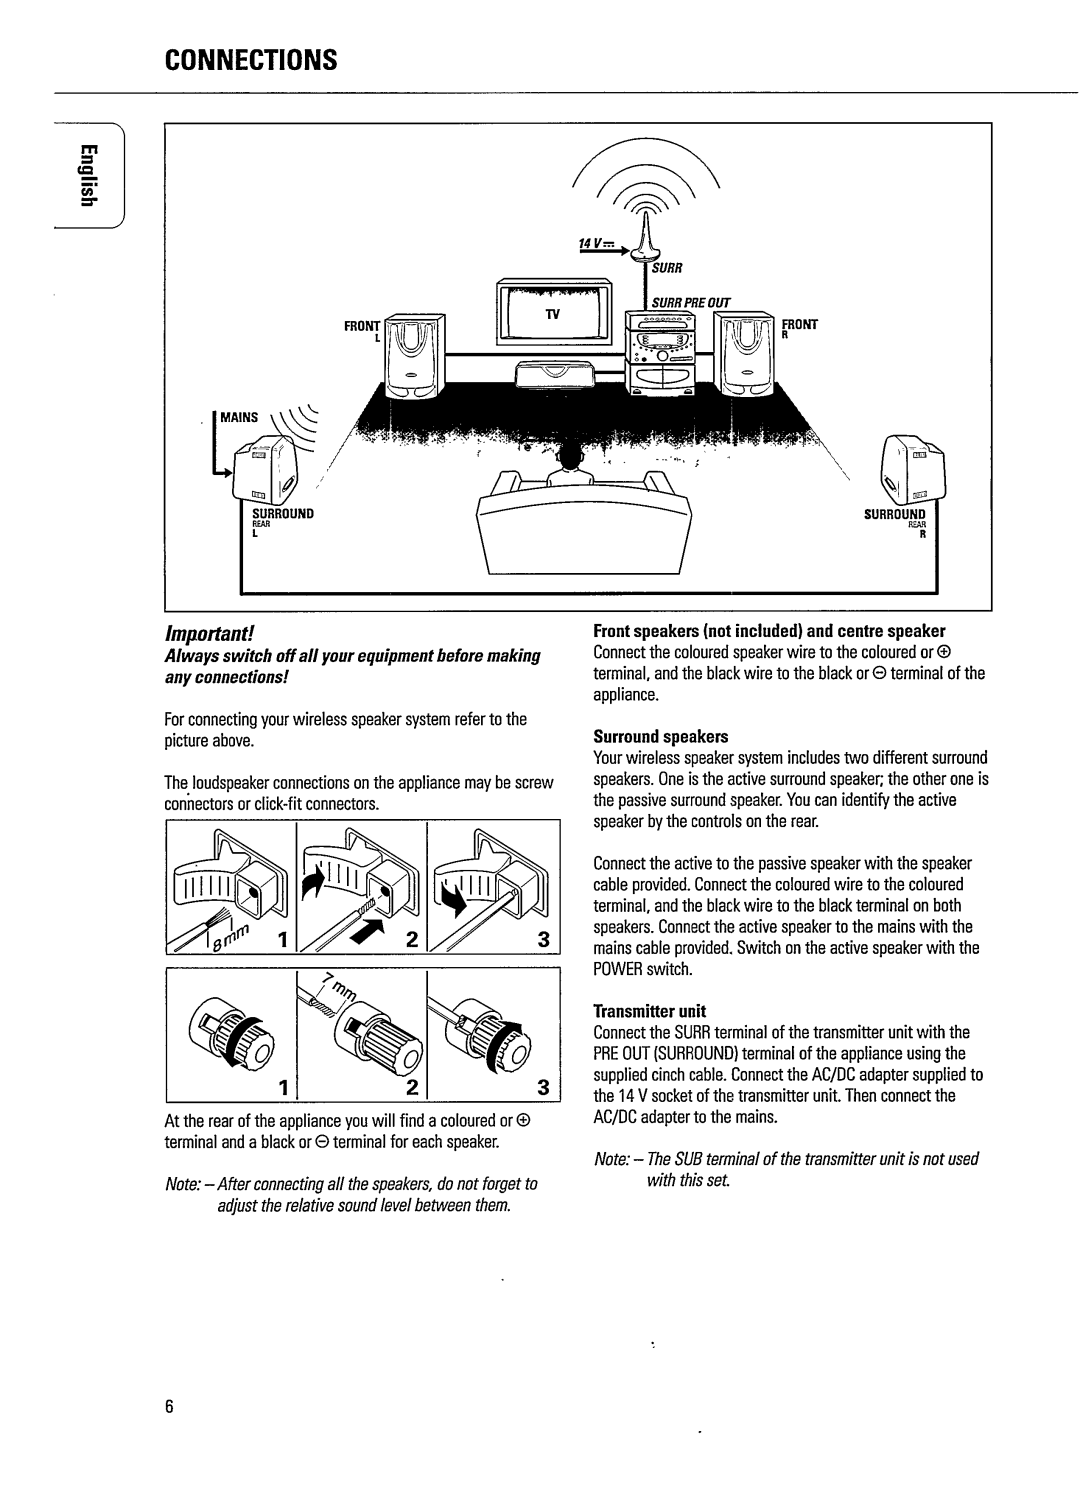 Philips FB 206W manual 